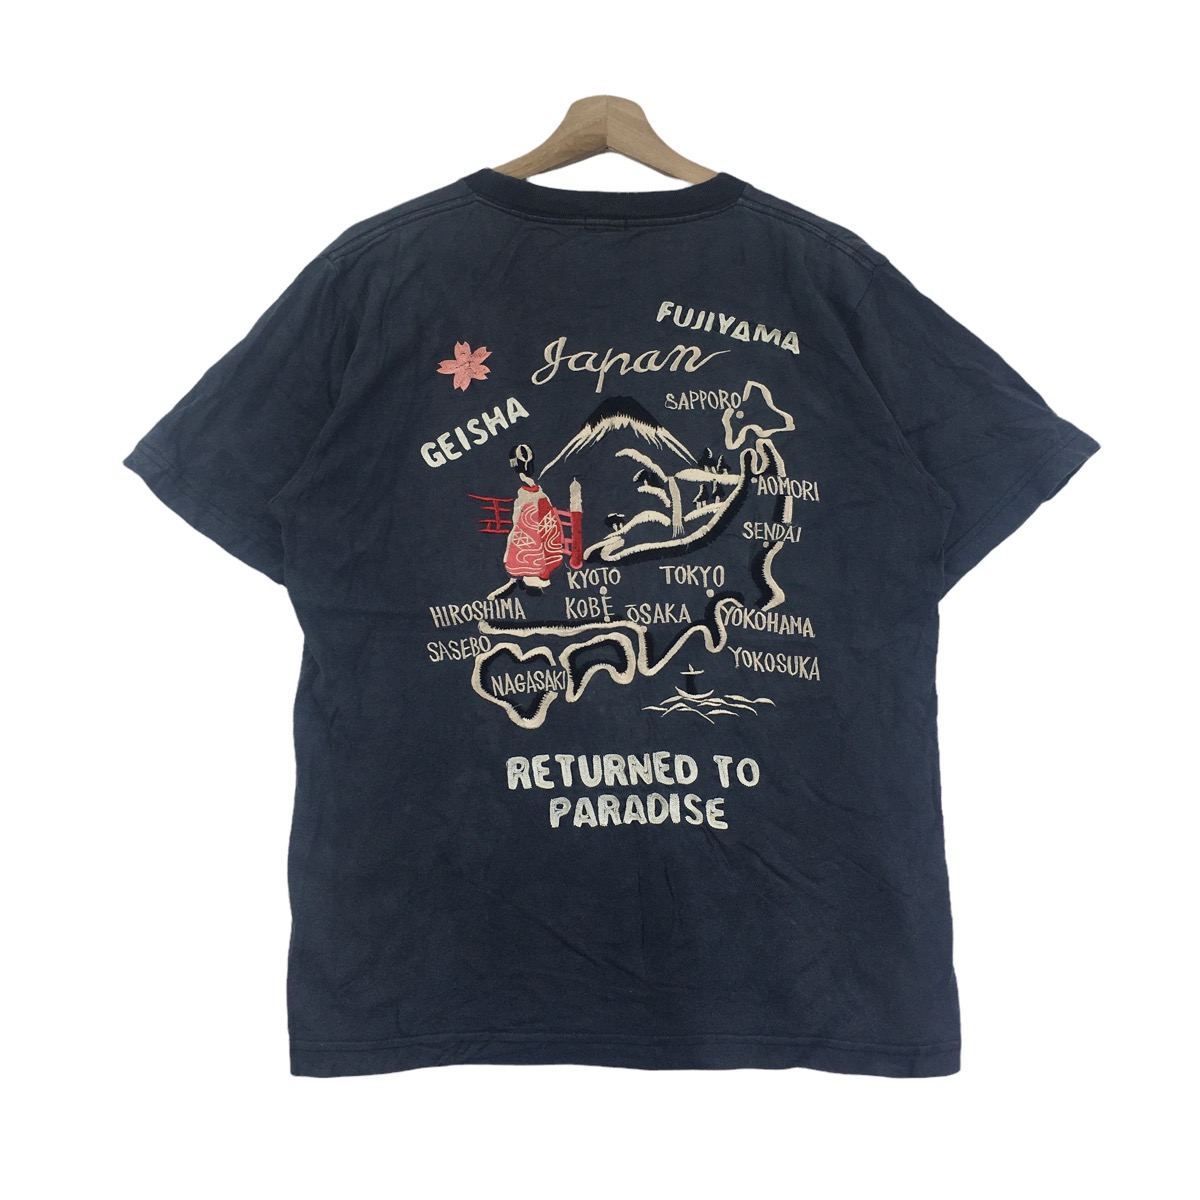 Toyo Enterprises - Vtg 80’ TOYO ENTERPRISE JAPAN Hand Embroidery Tee Shirt - 1